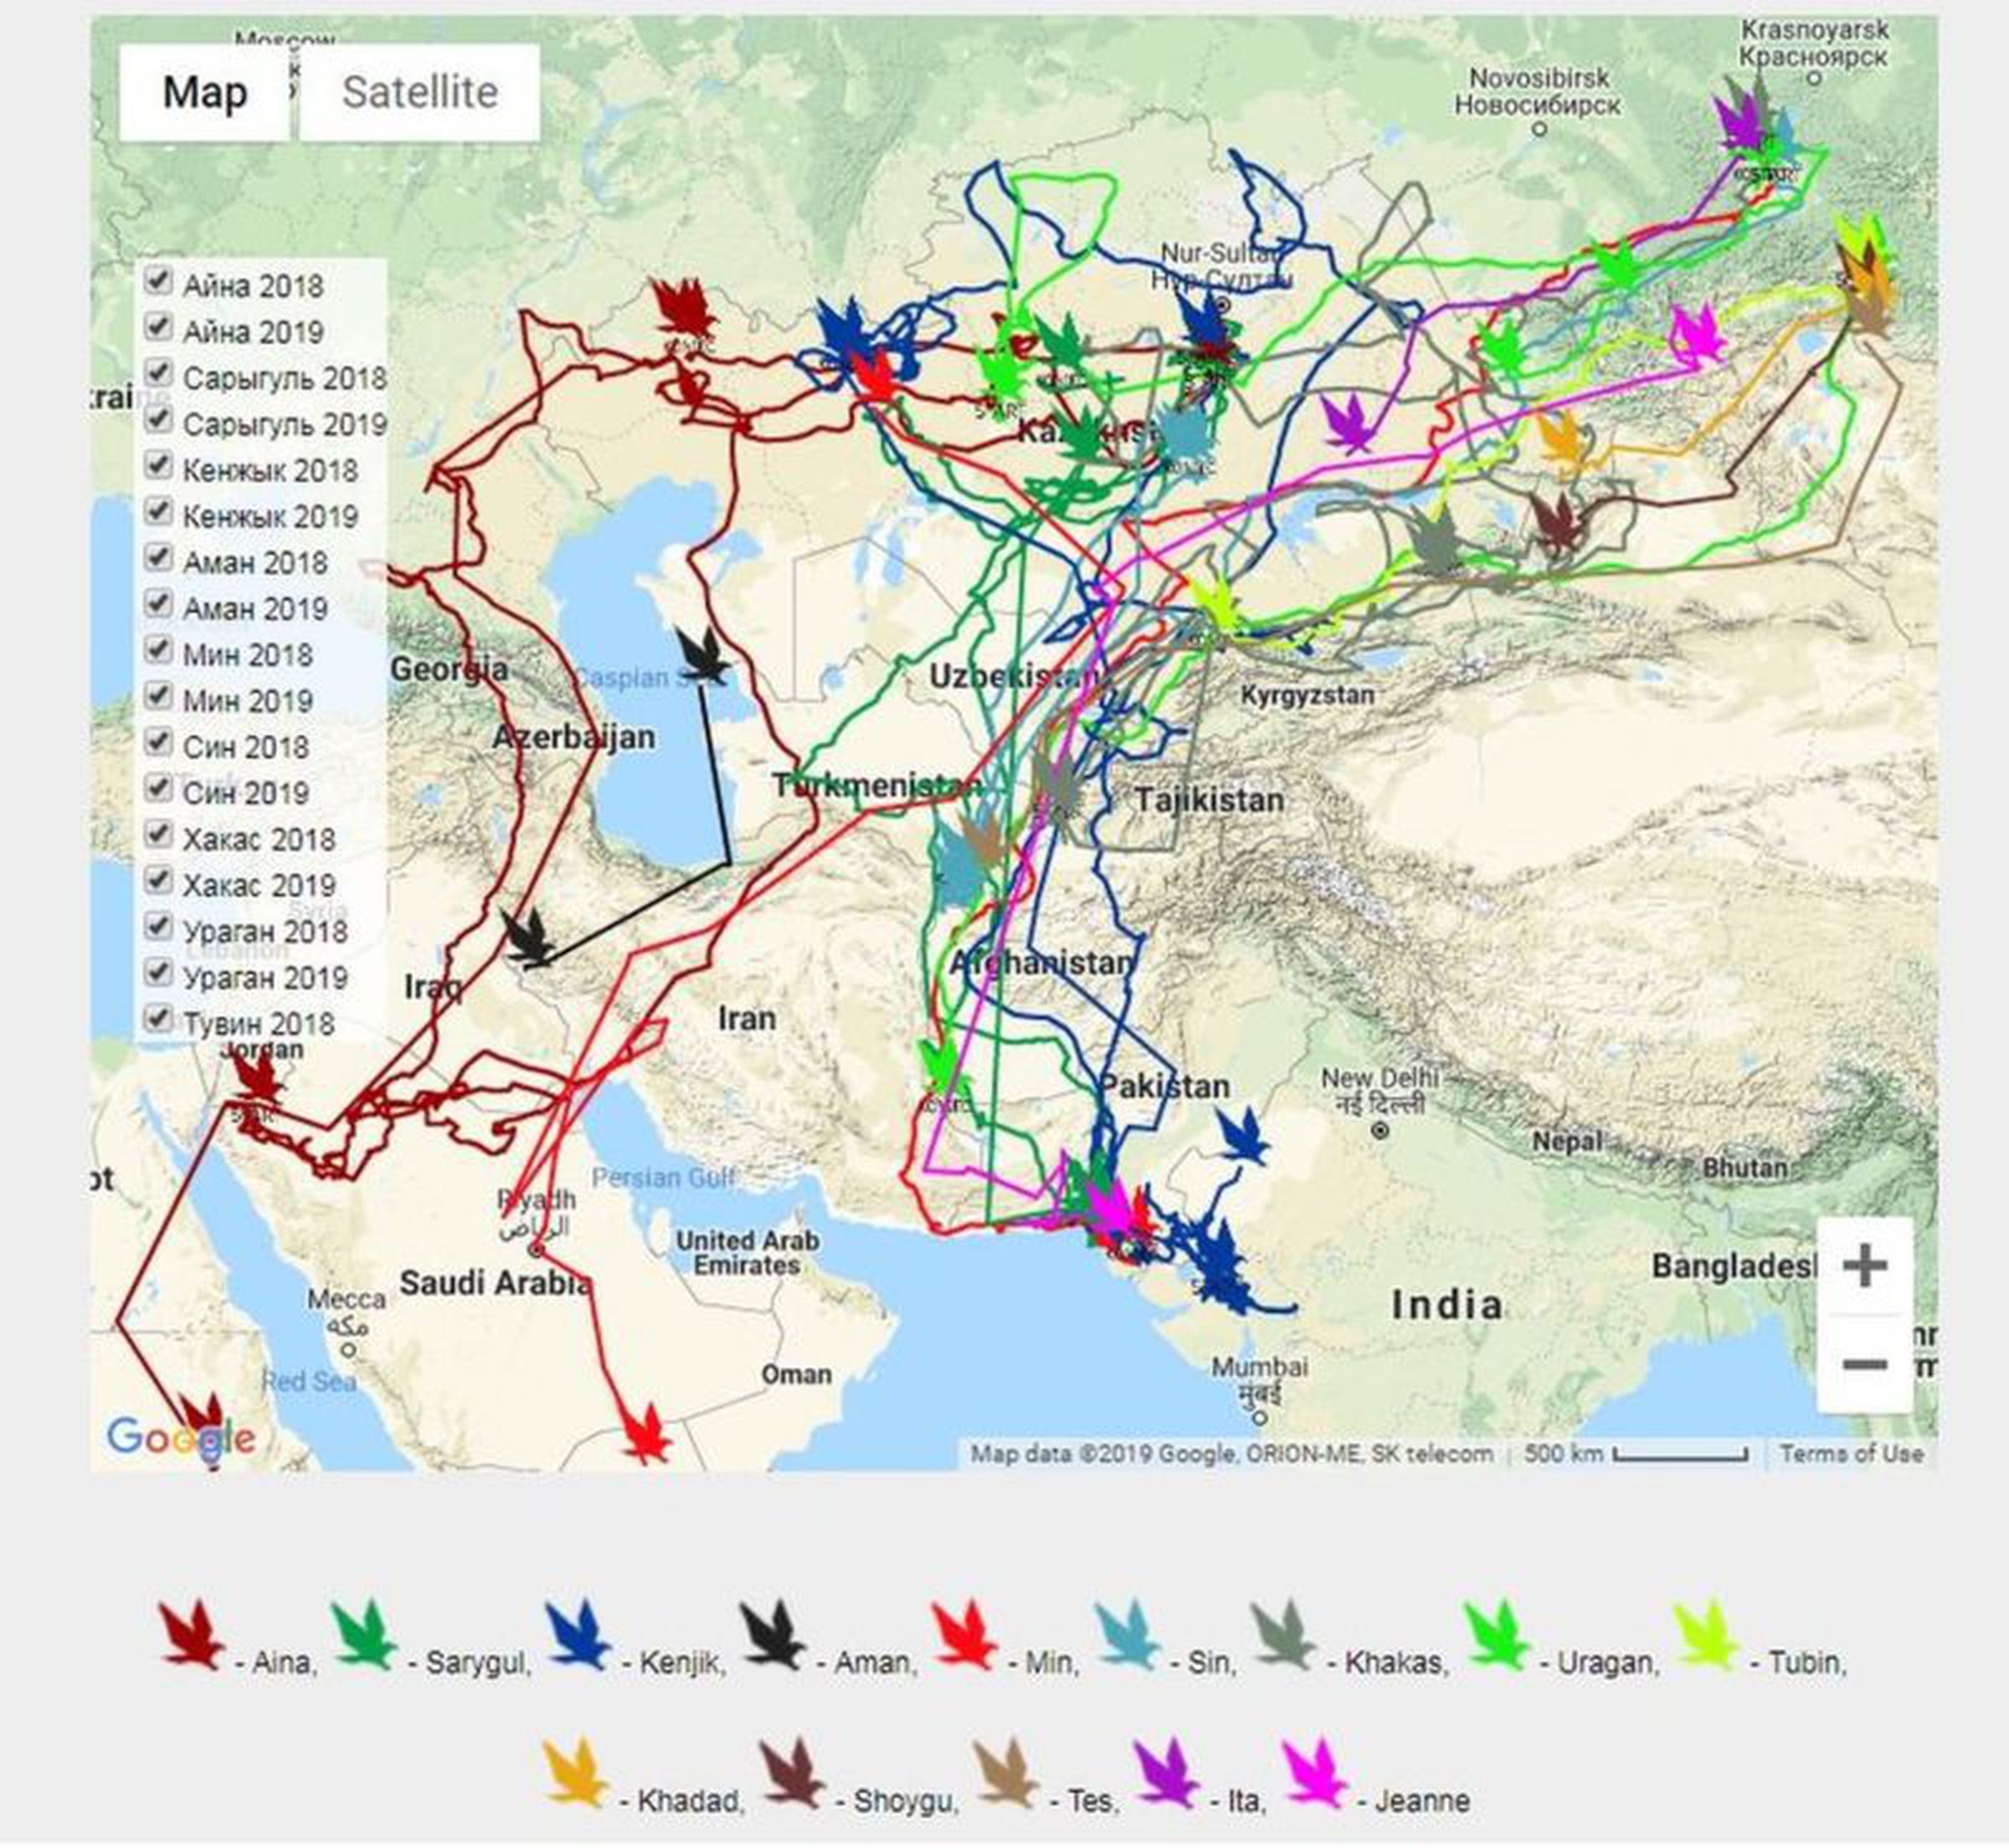 The eagles’ migration routes.